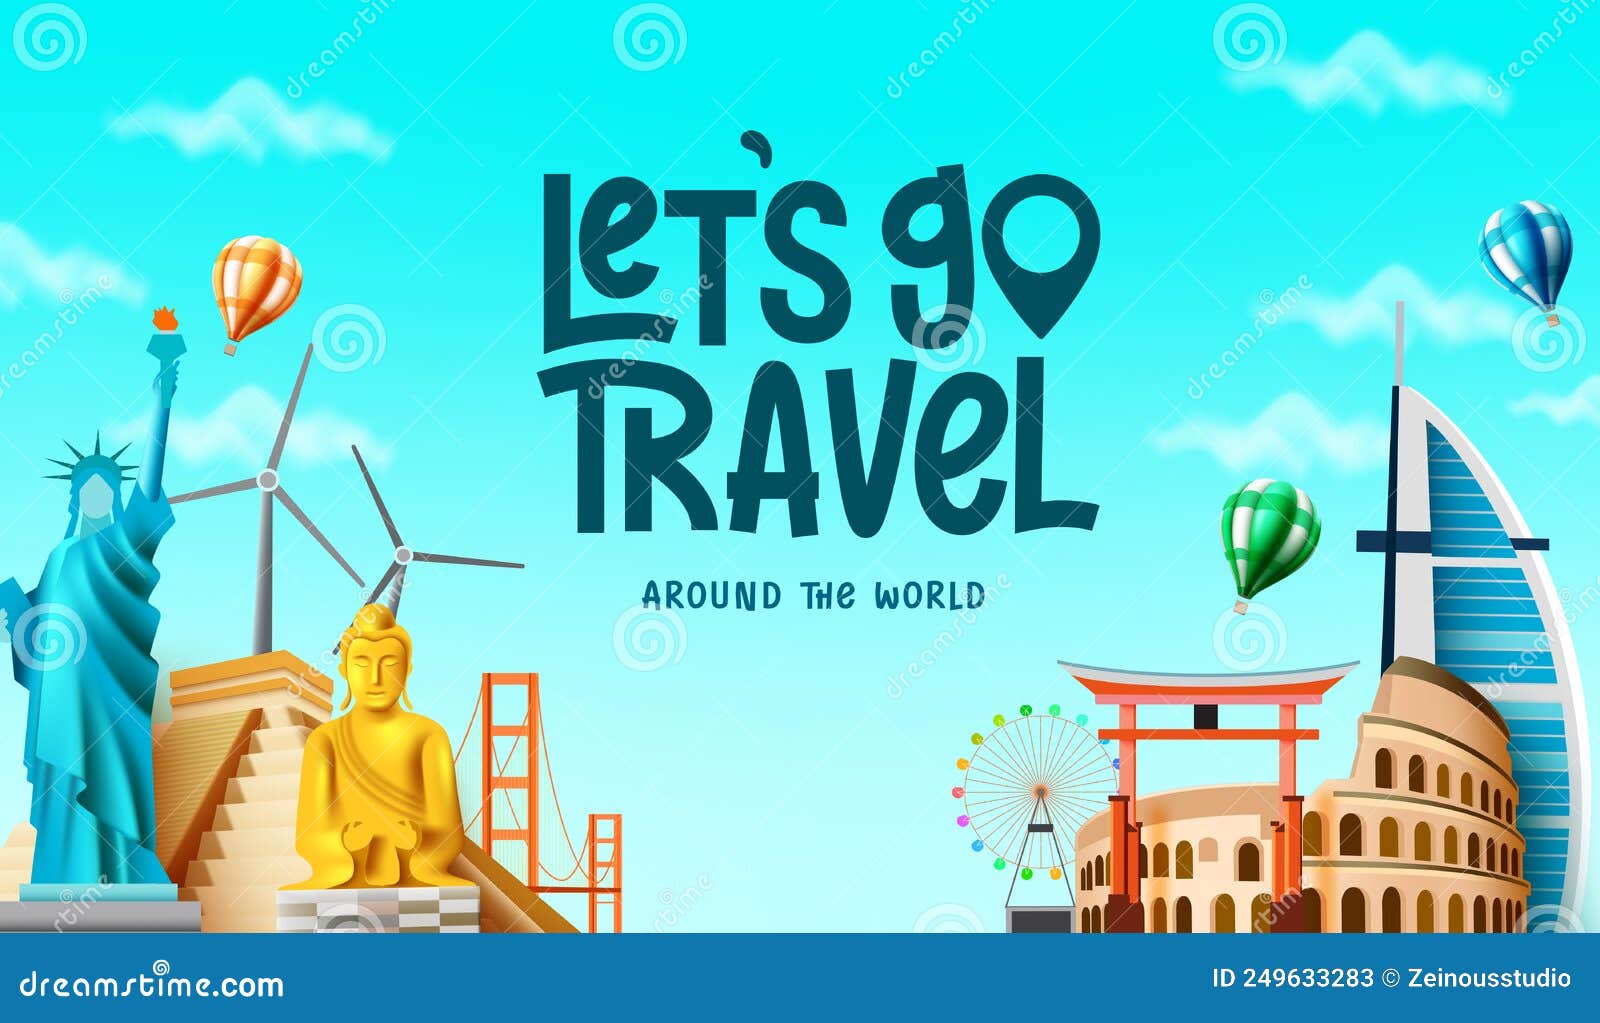 Travel Worldwide Vector Background Design. Let`s Go Travel Around the ...